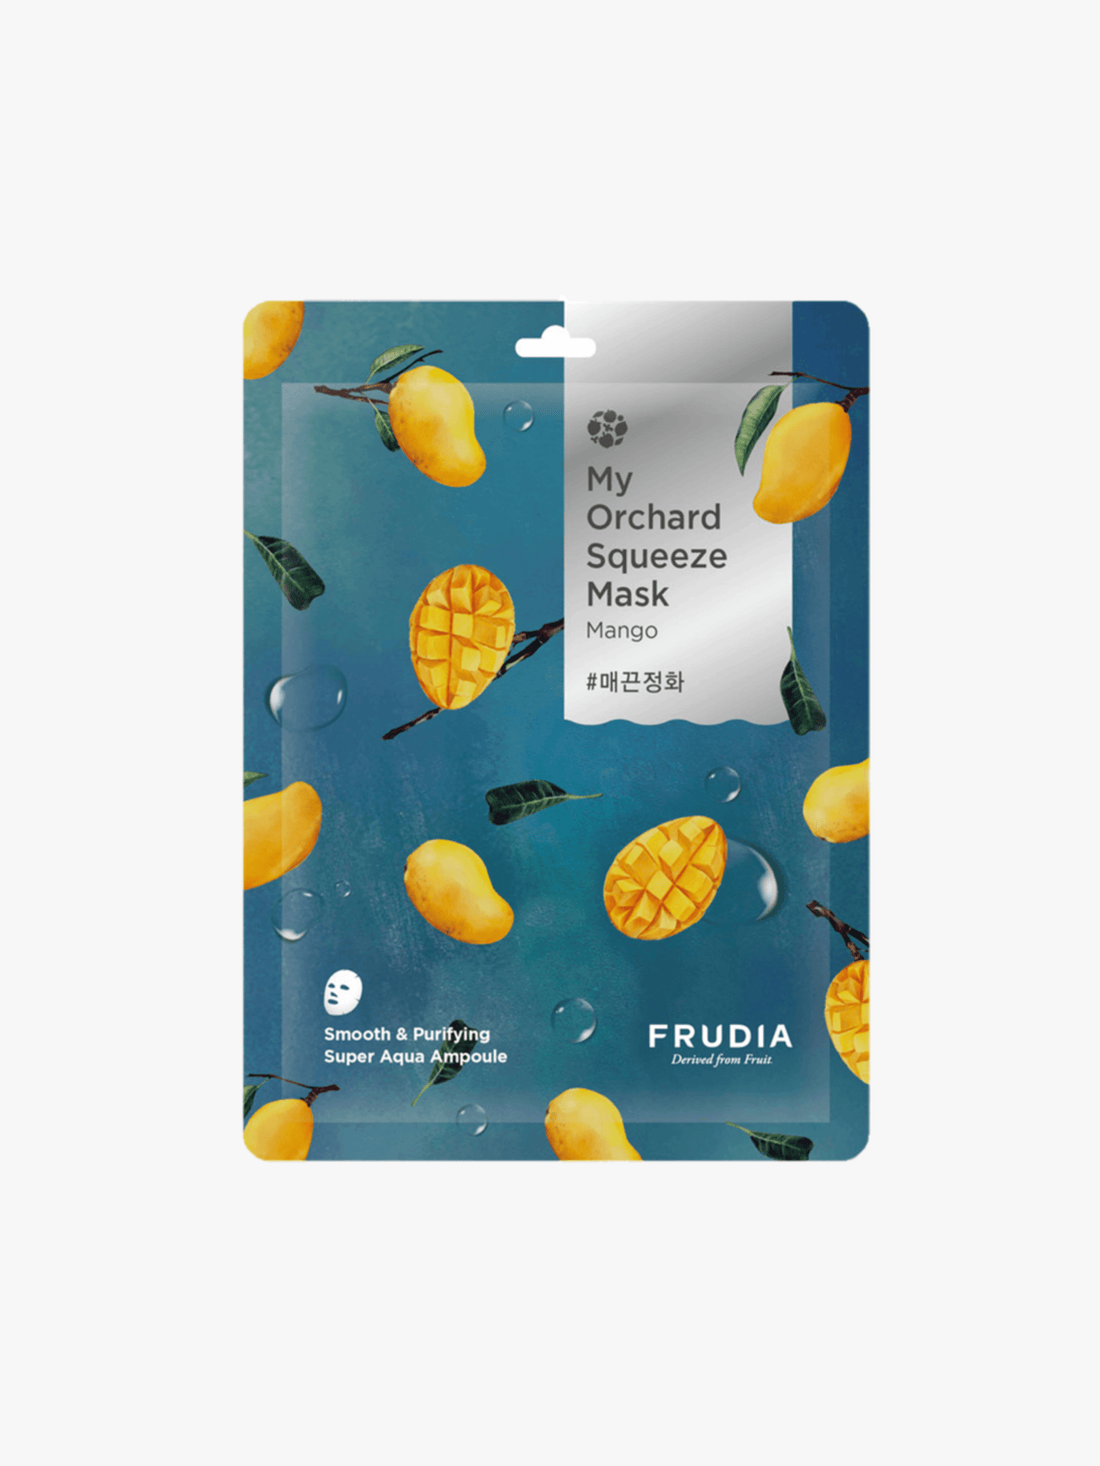 FRUDIA - Masque - My Orchard Squeeze Mask Mango